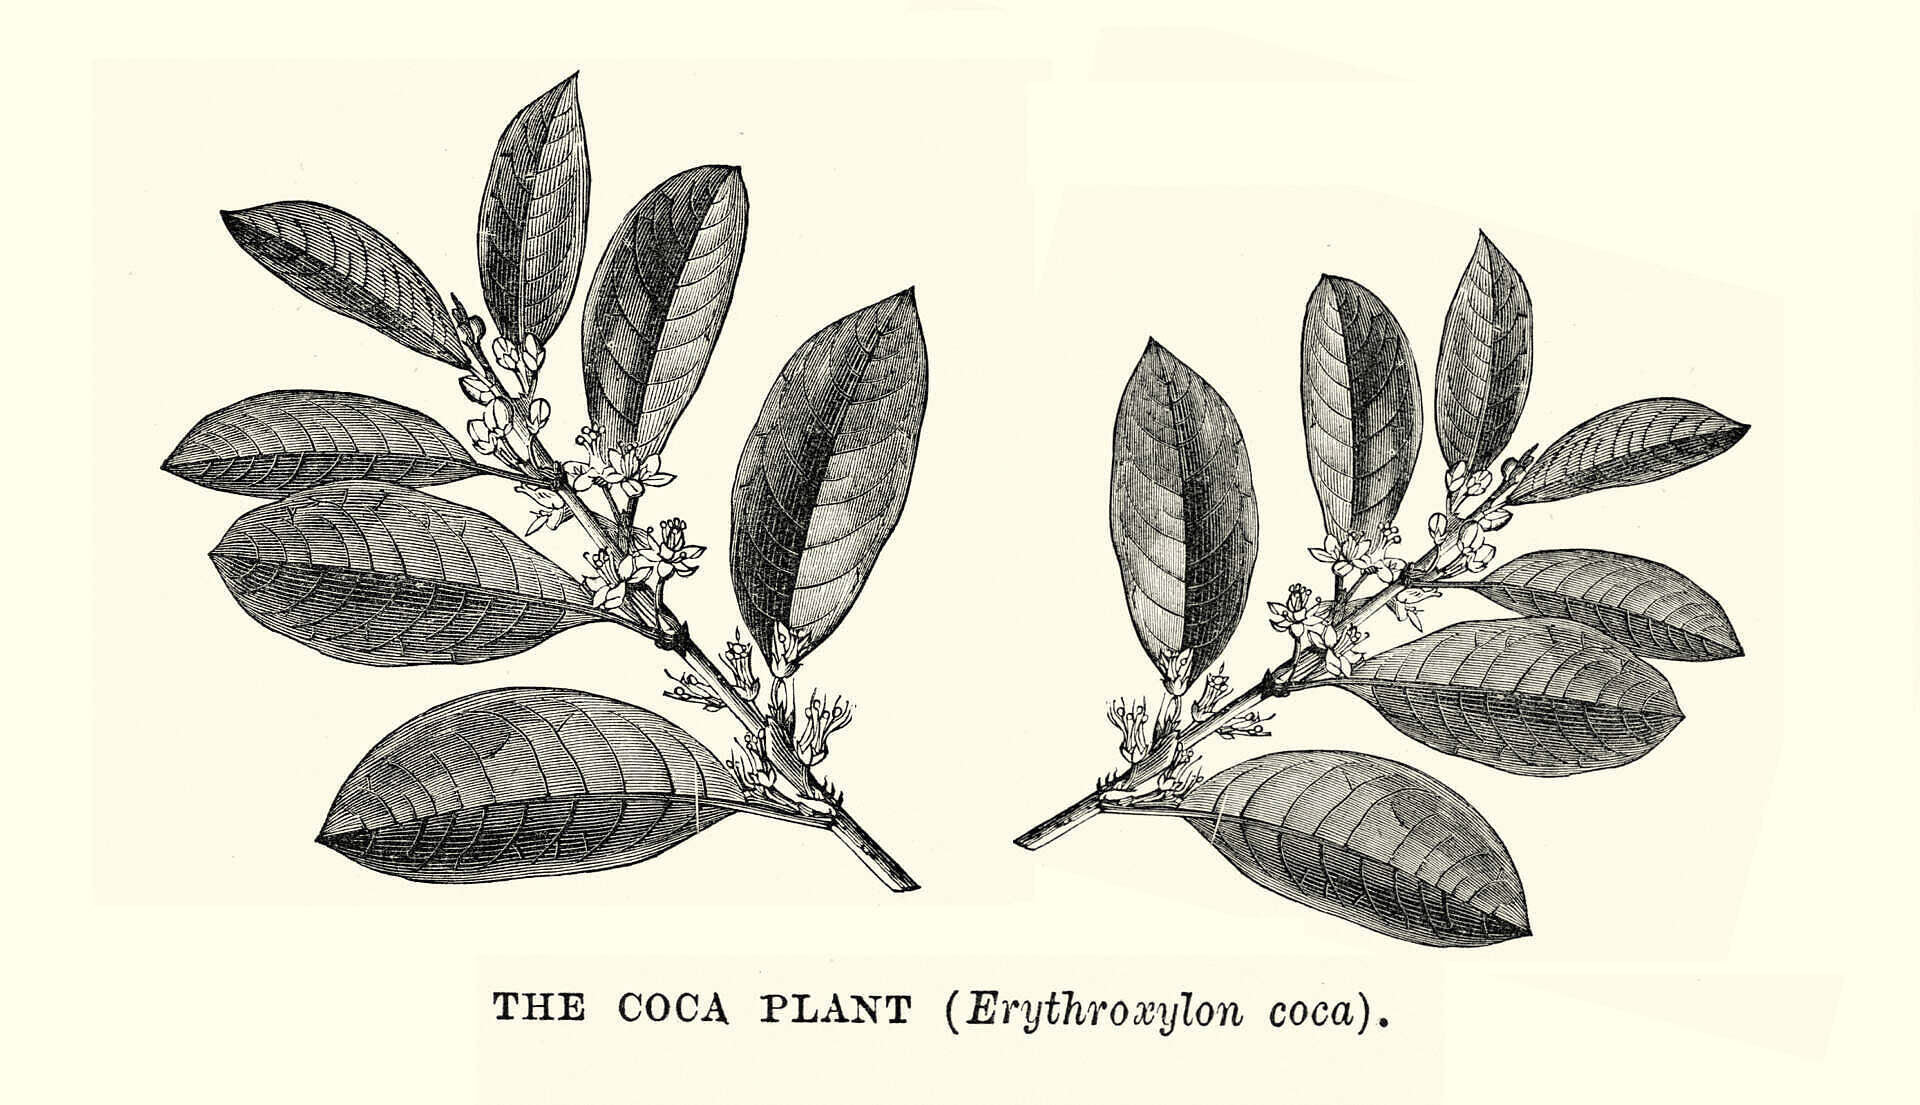 The coca plant (Erythroxylon coca); the plant used to produce cocaine